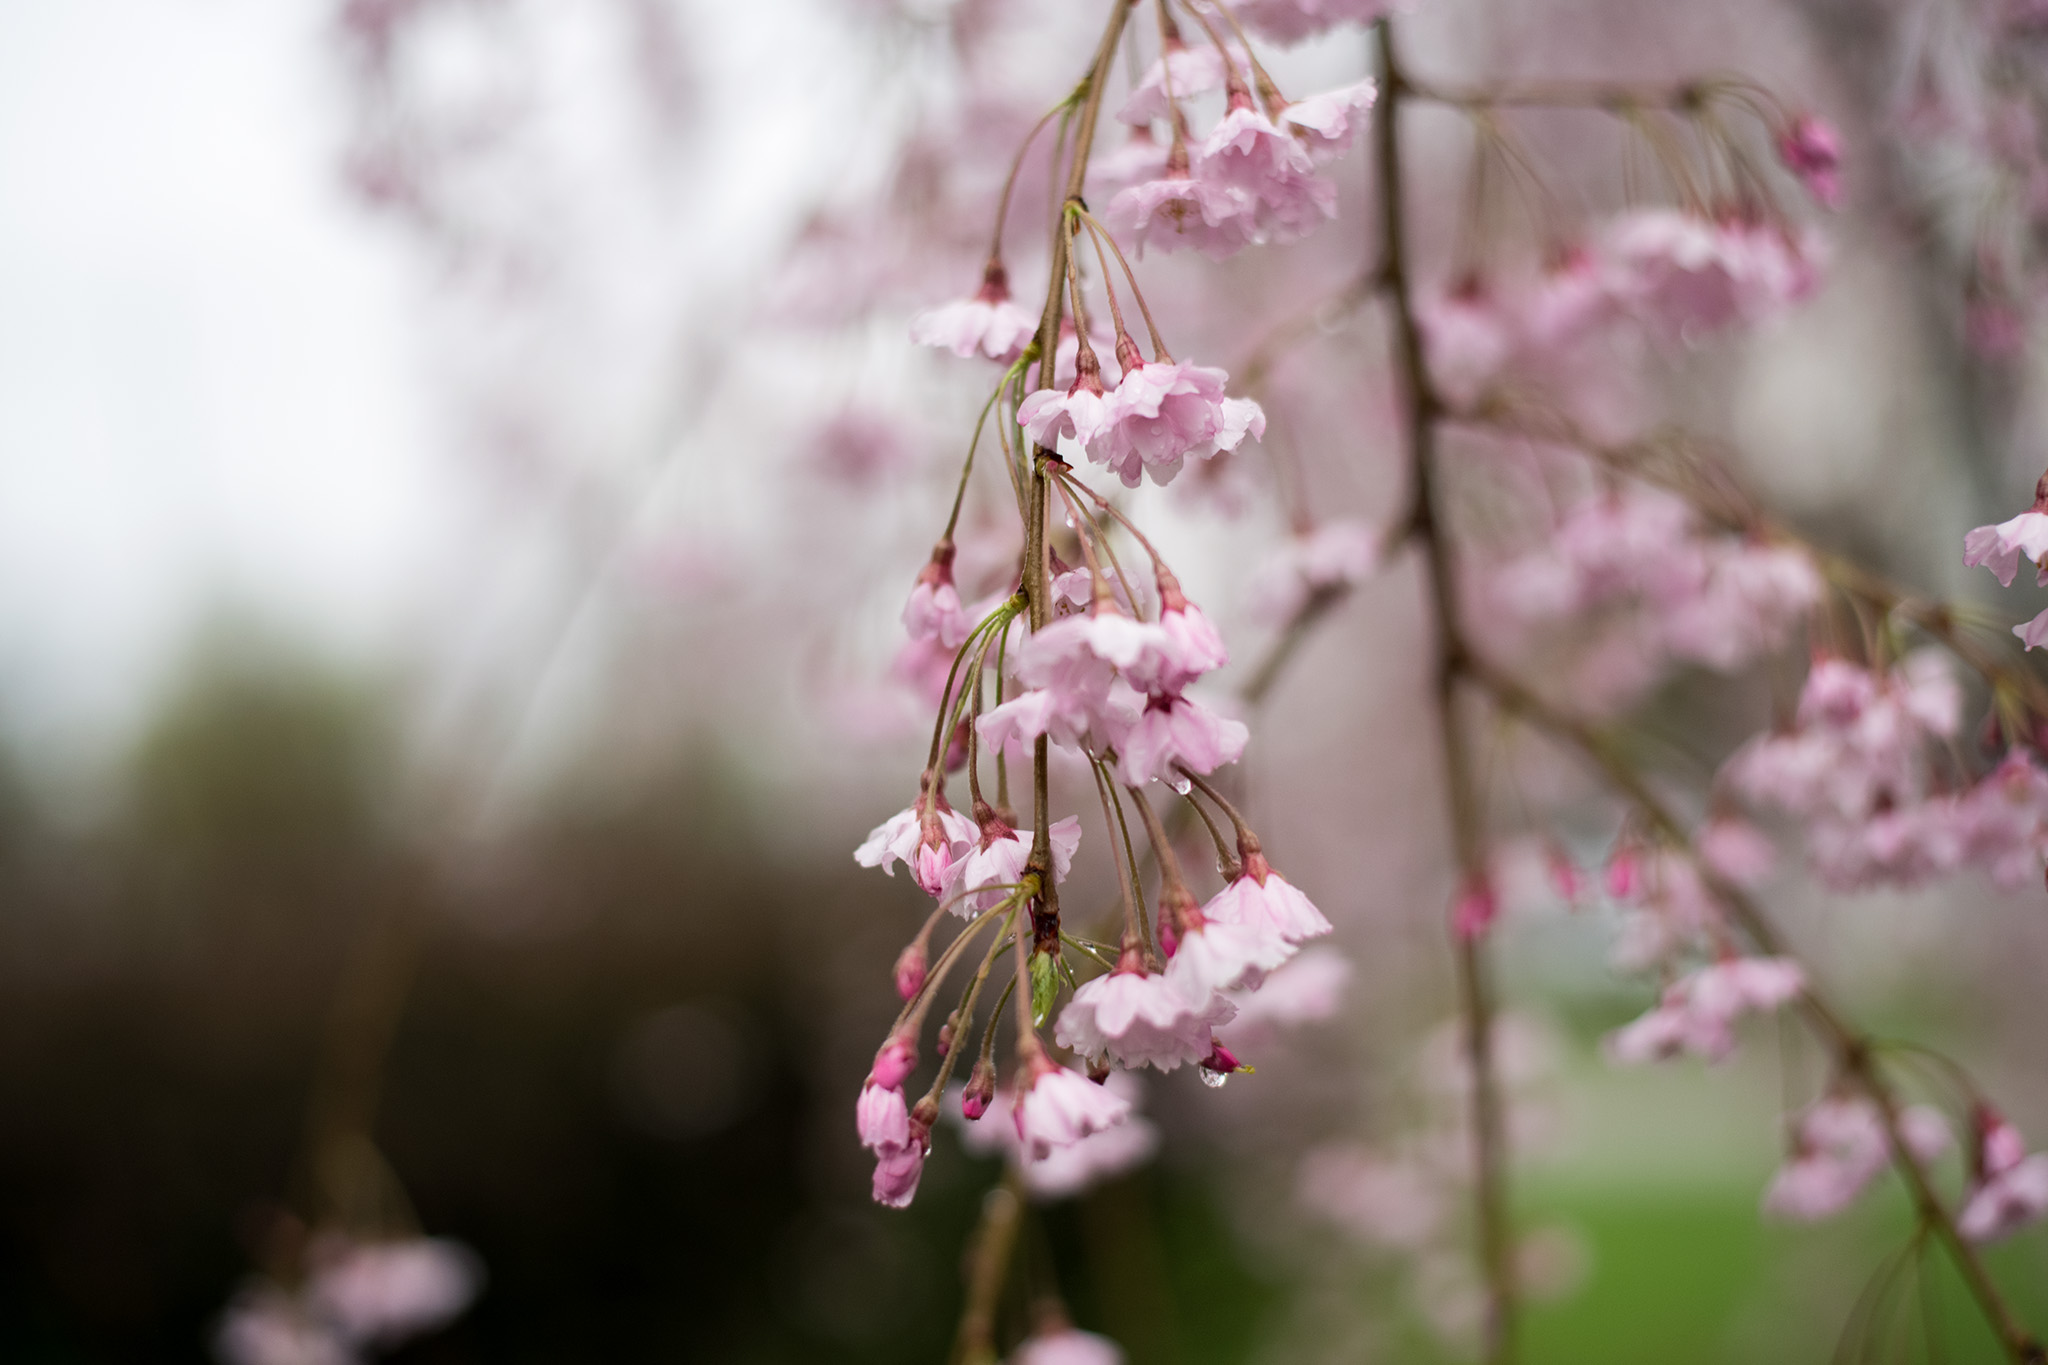 Rain on spring blossoms